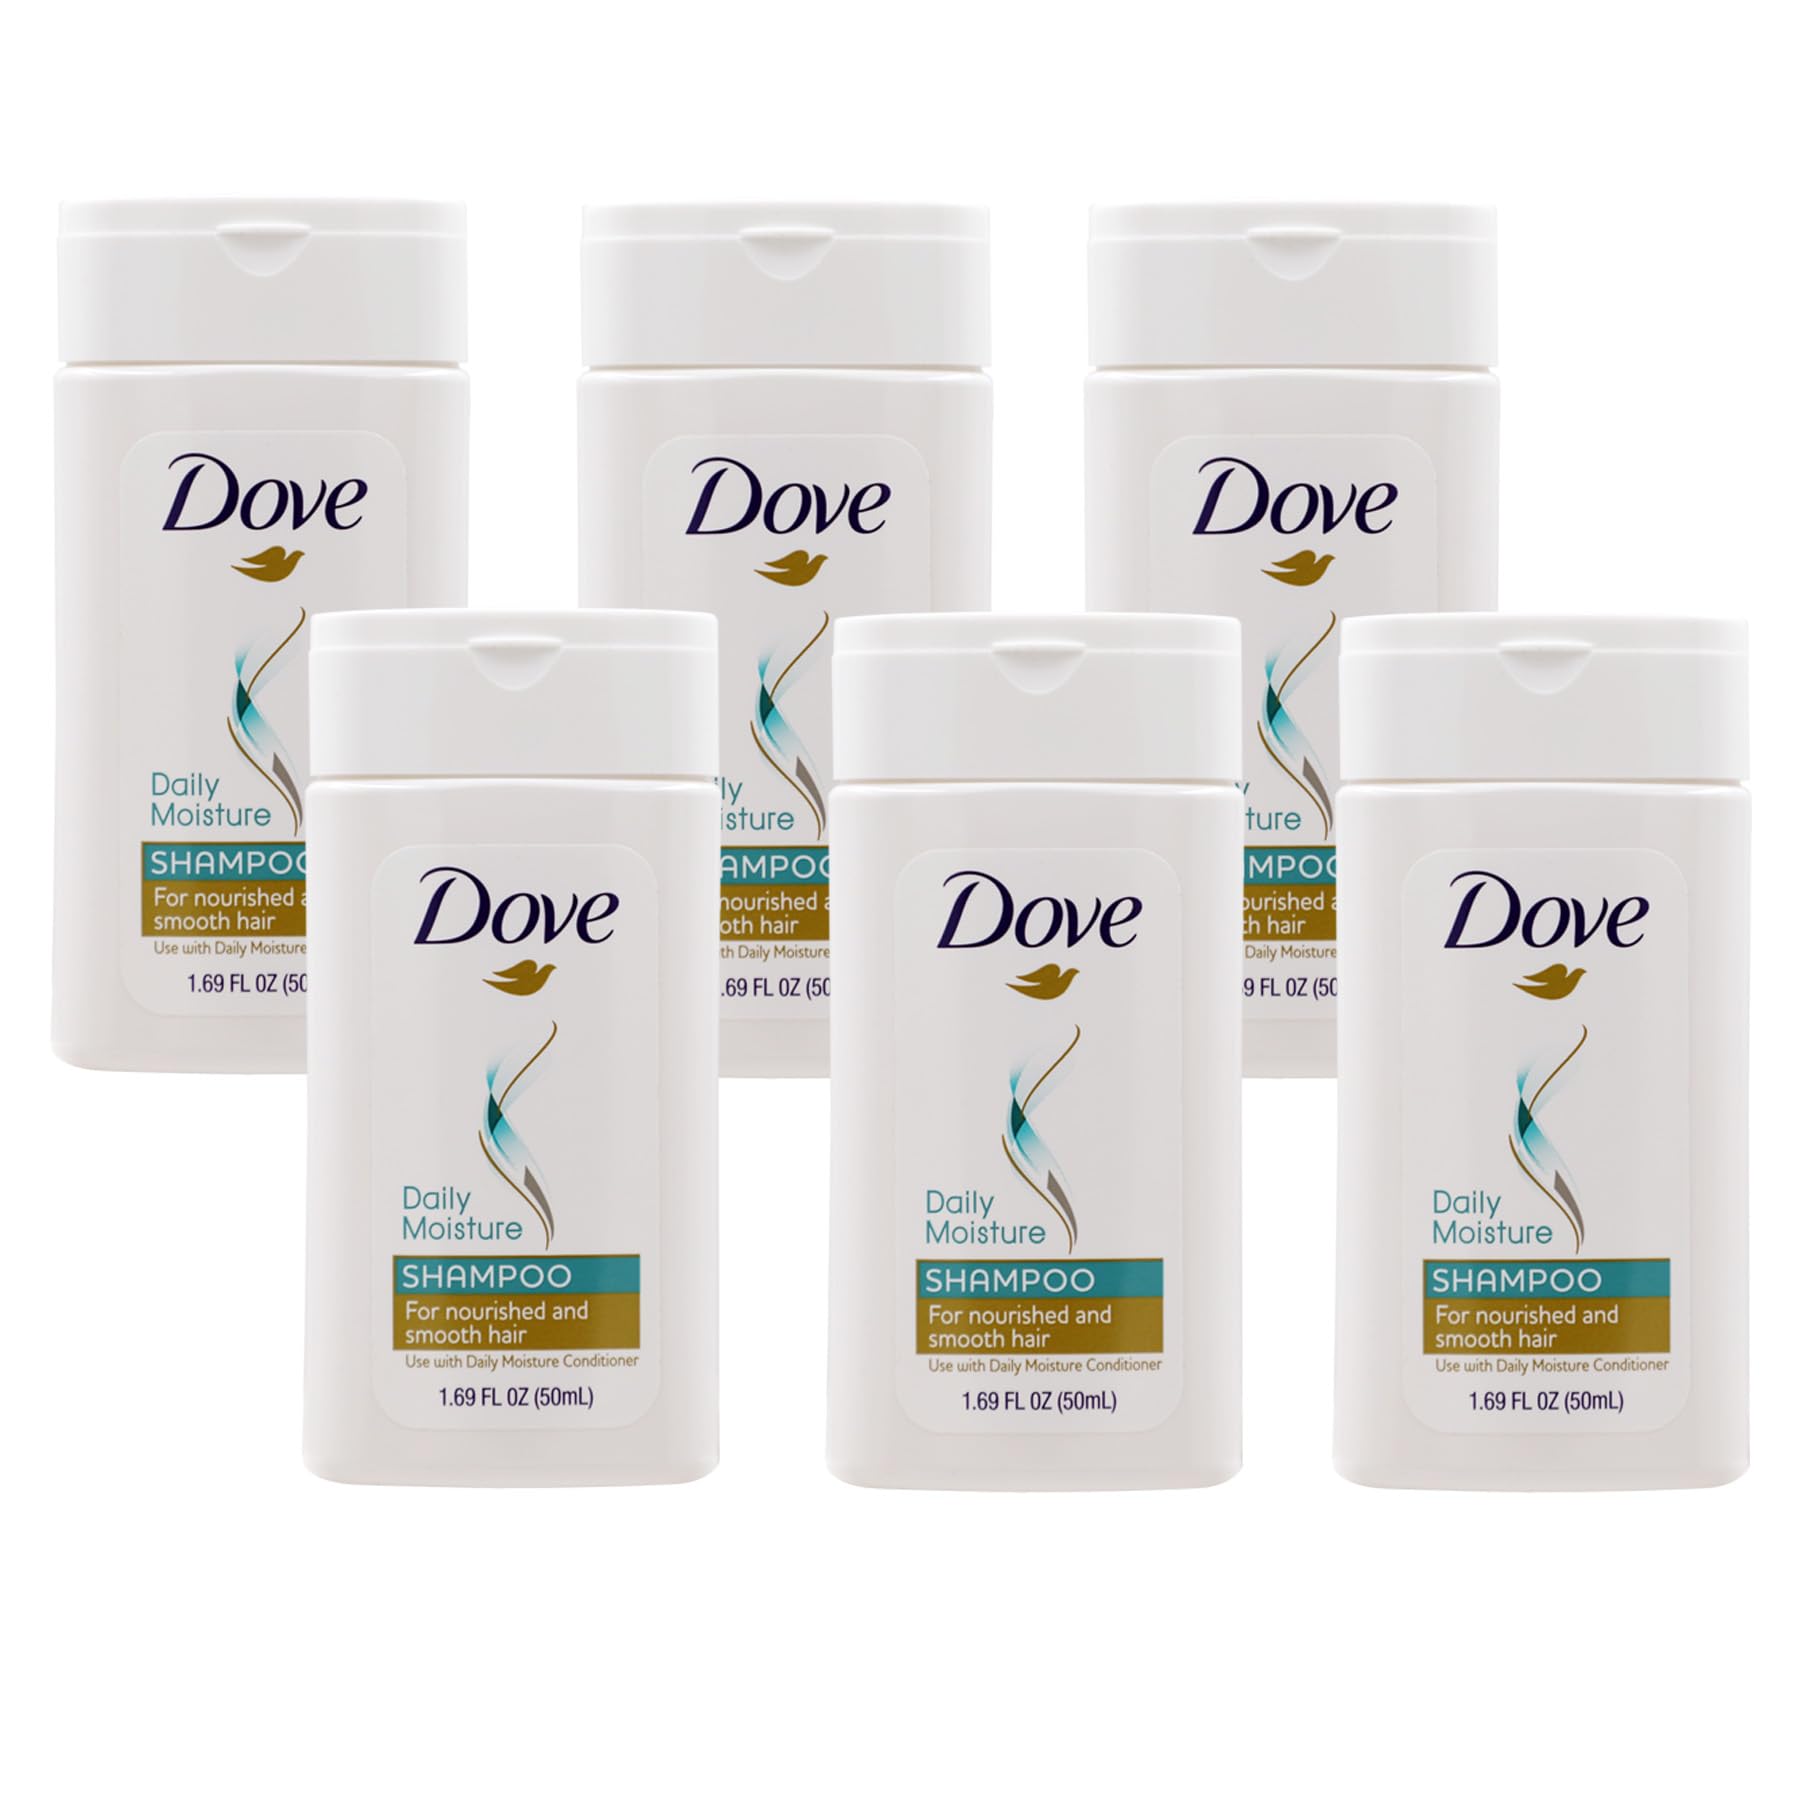 Dove Shampoo, Daily Moisture, Nourishing System for Smooth Hair, 6-Pack, 1.7 FL Oz, 6 Bottles